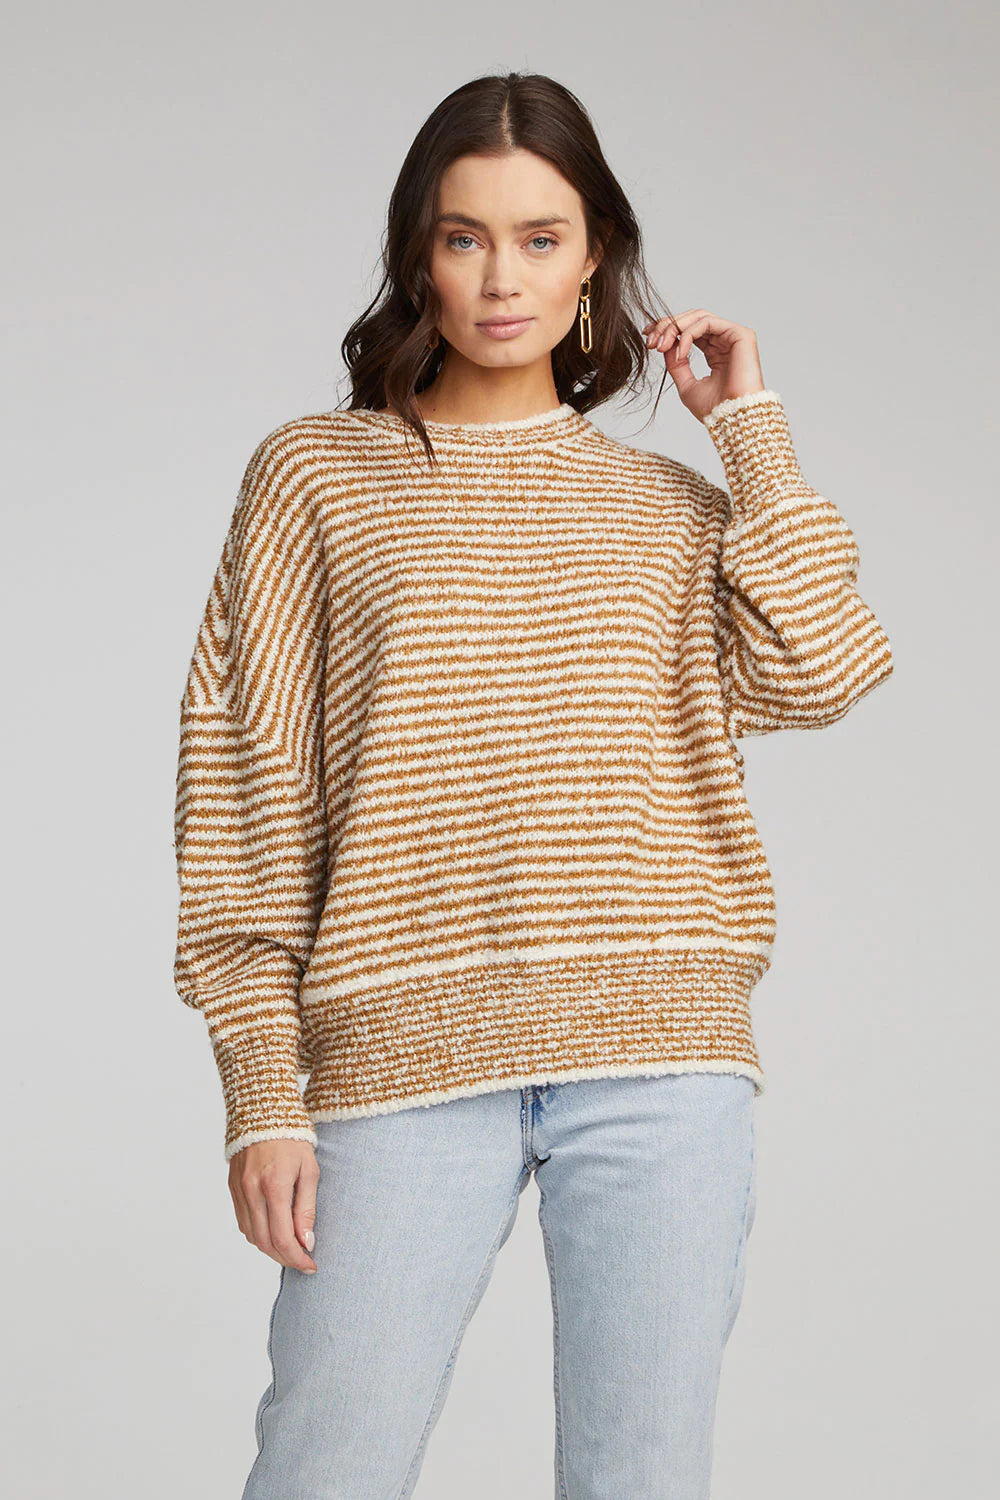 Saltwater Luxe Autumn Sweater